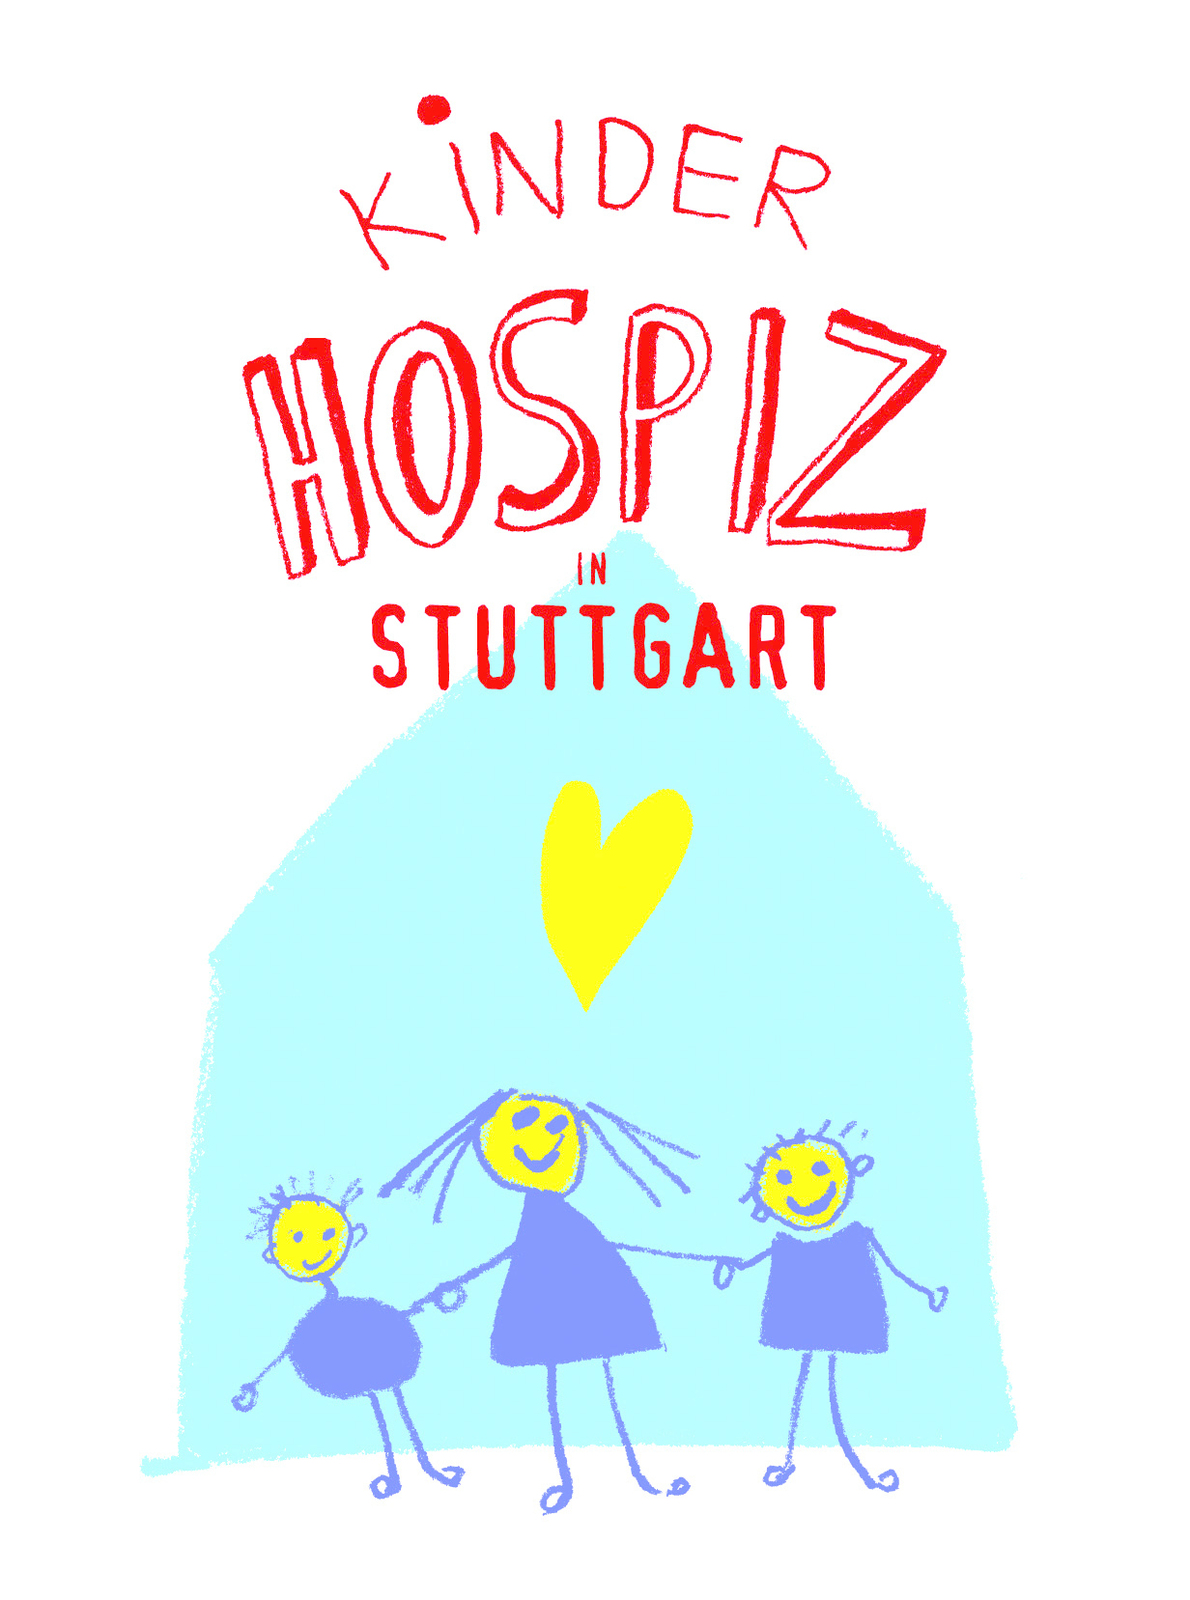 Kinderhospiz Stuttgart, Hospiz